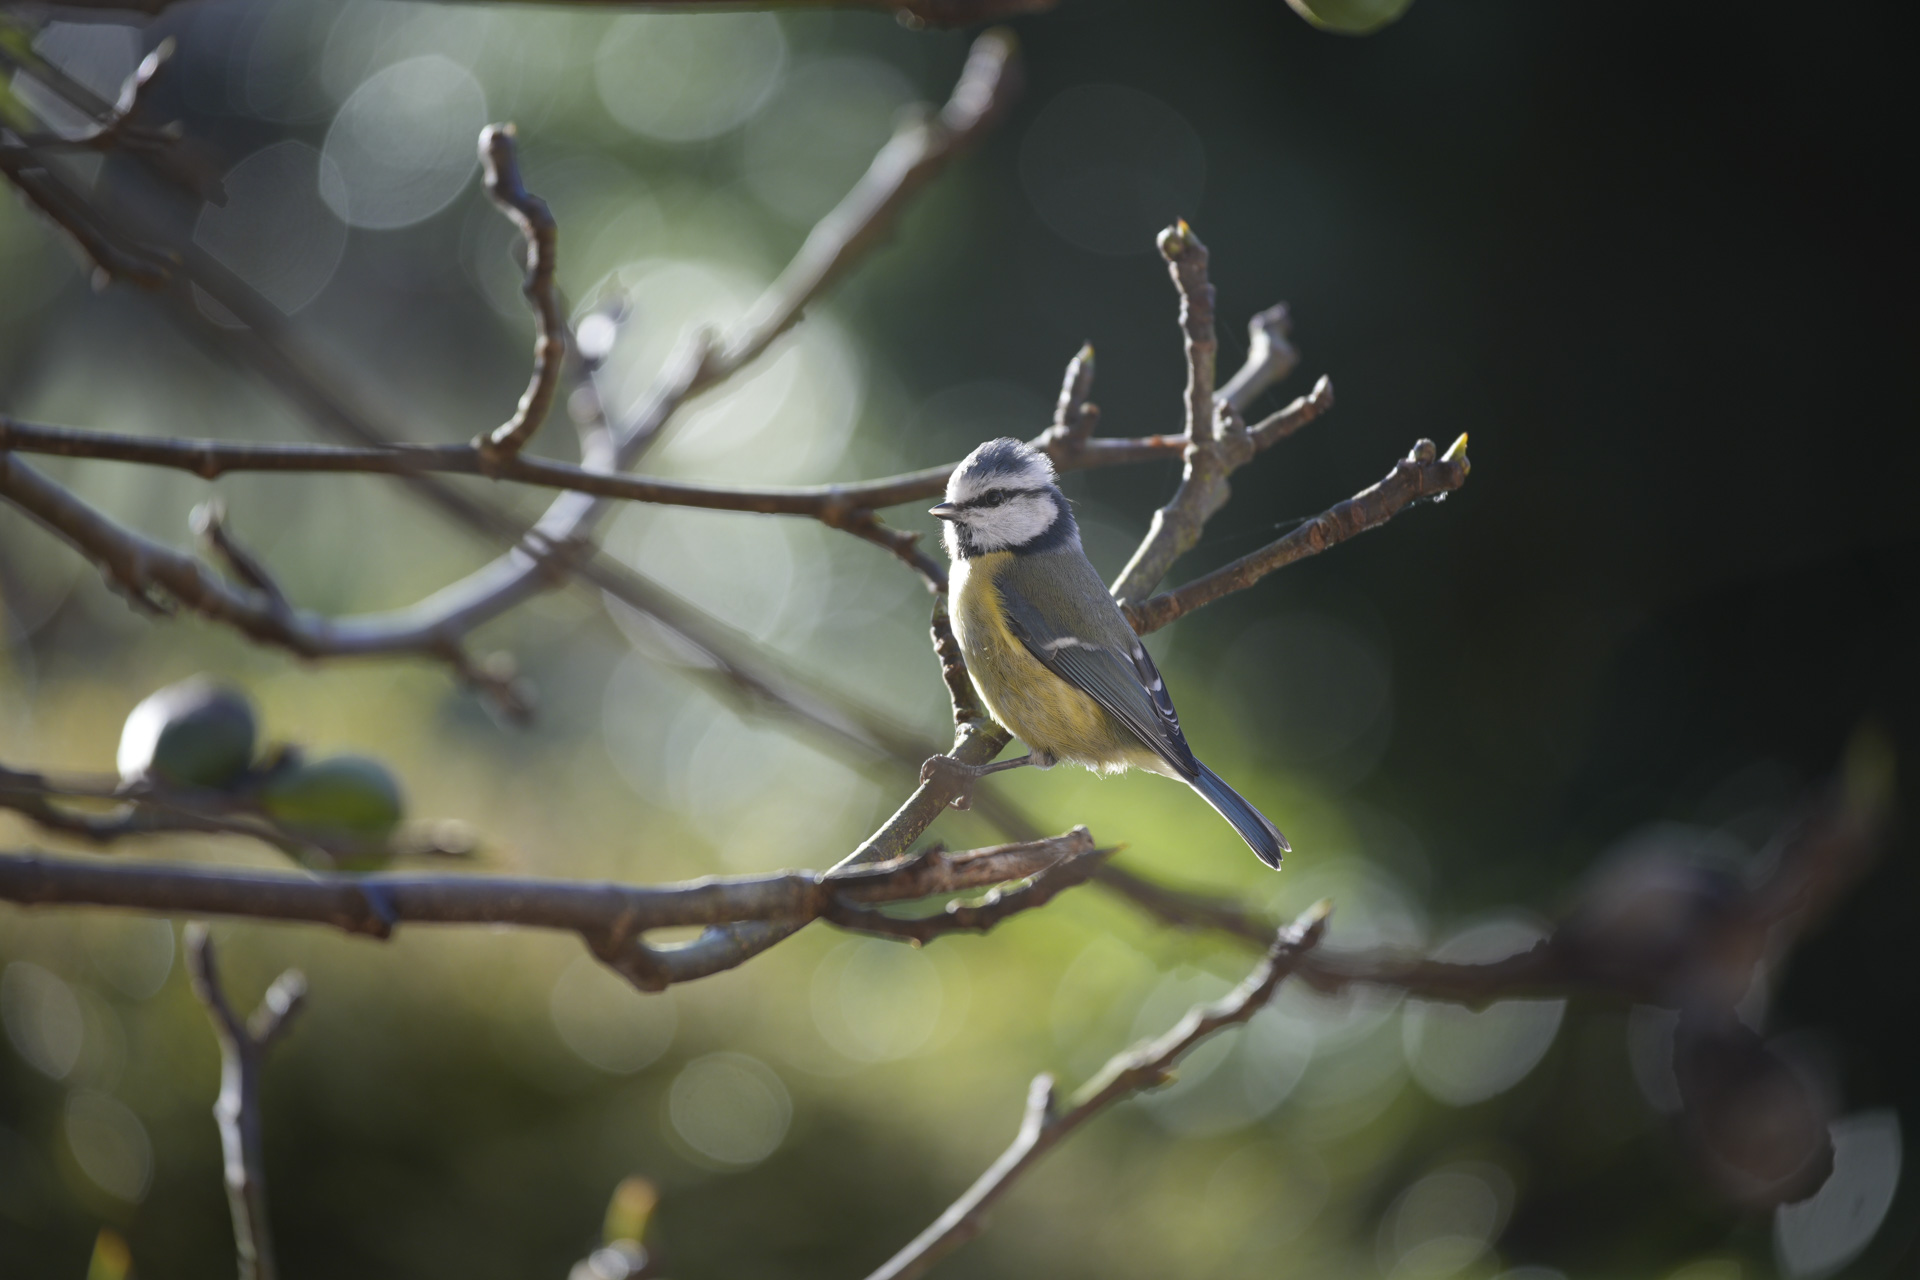 Small garden bird in a tree at first light